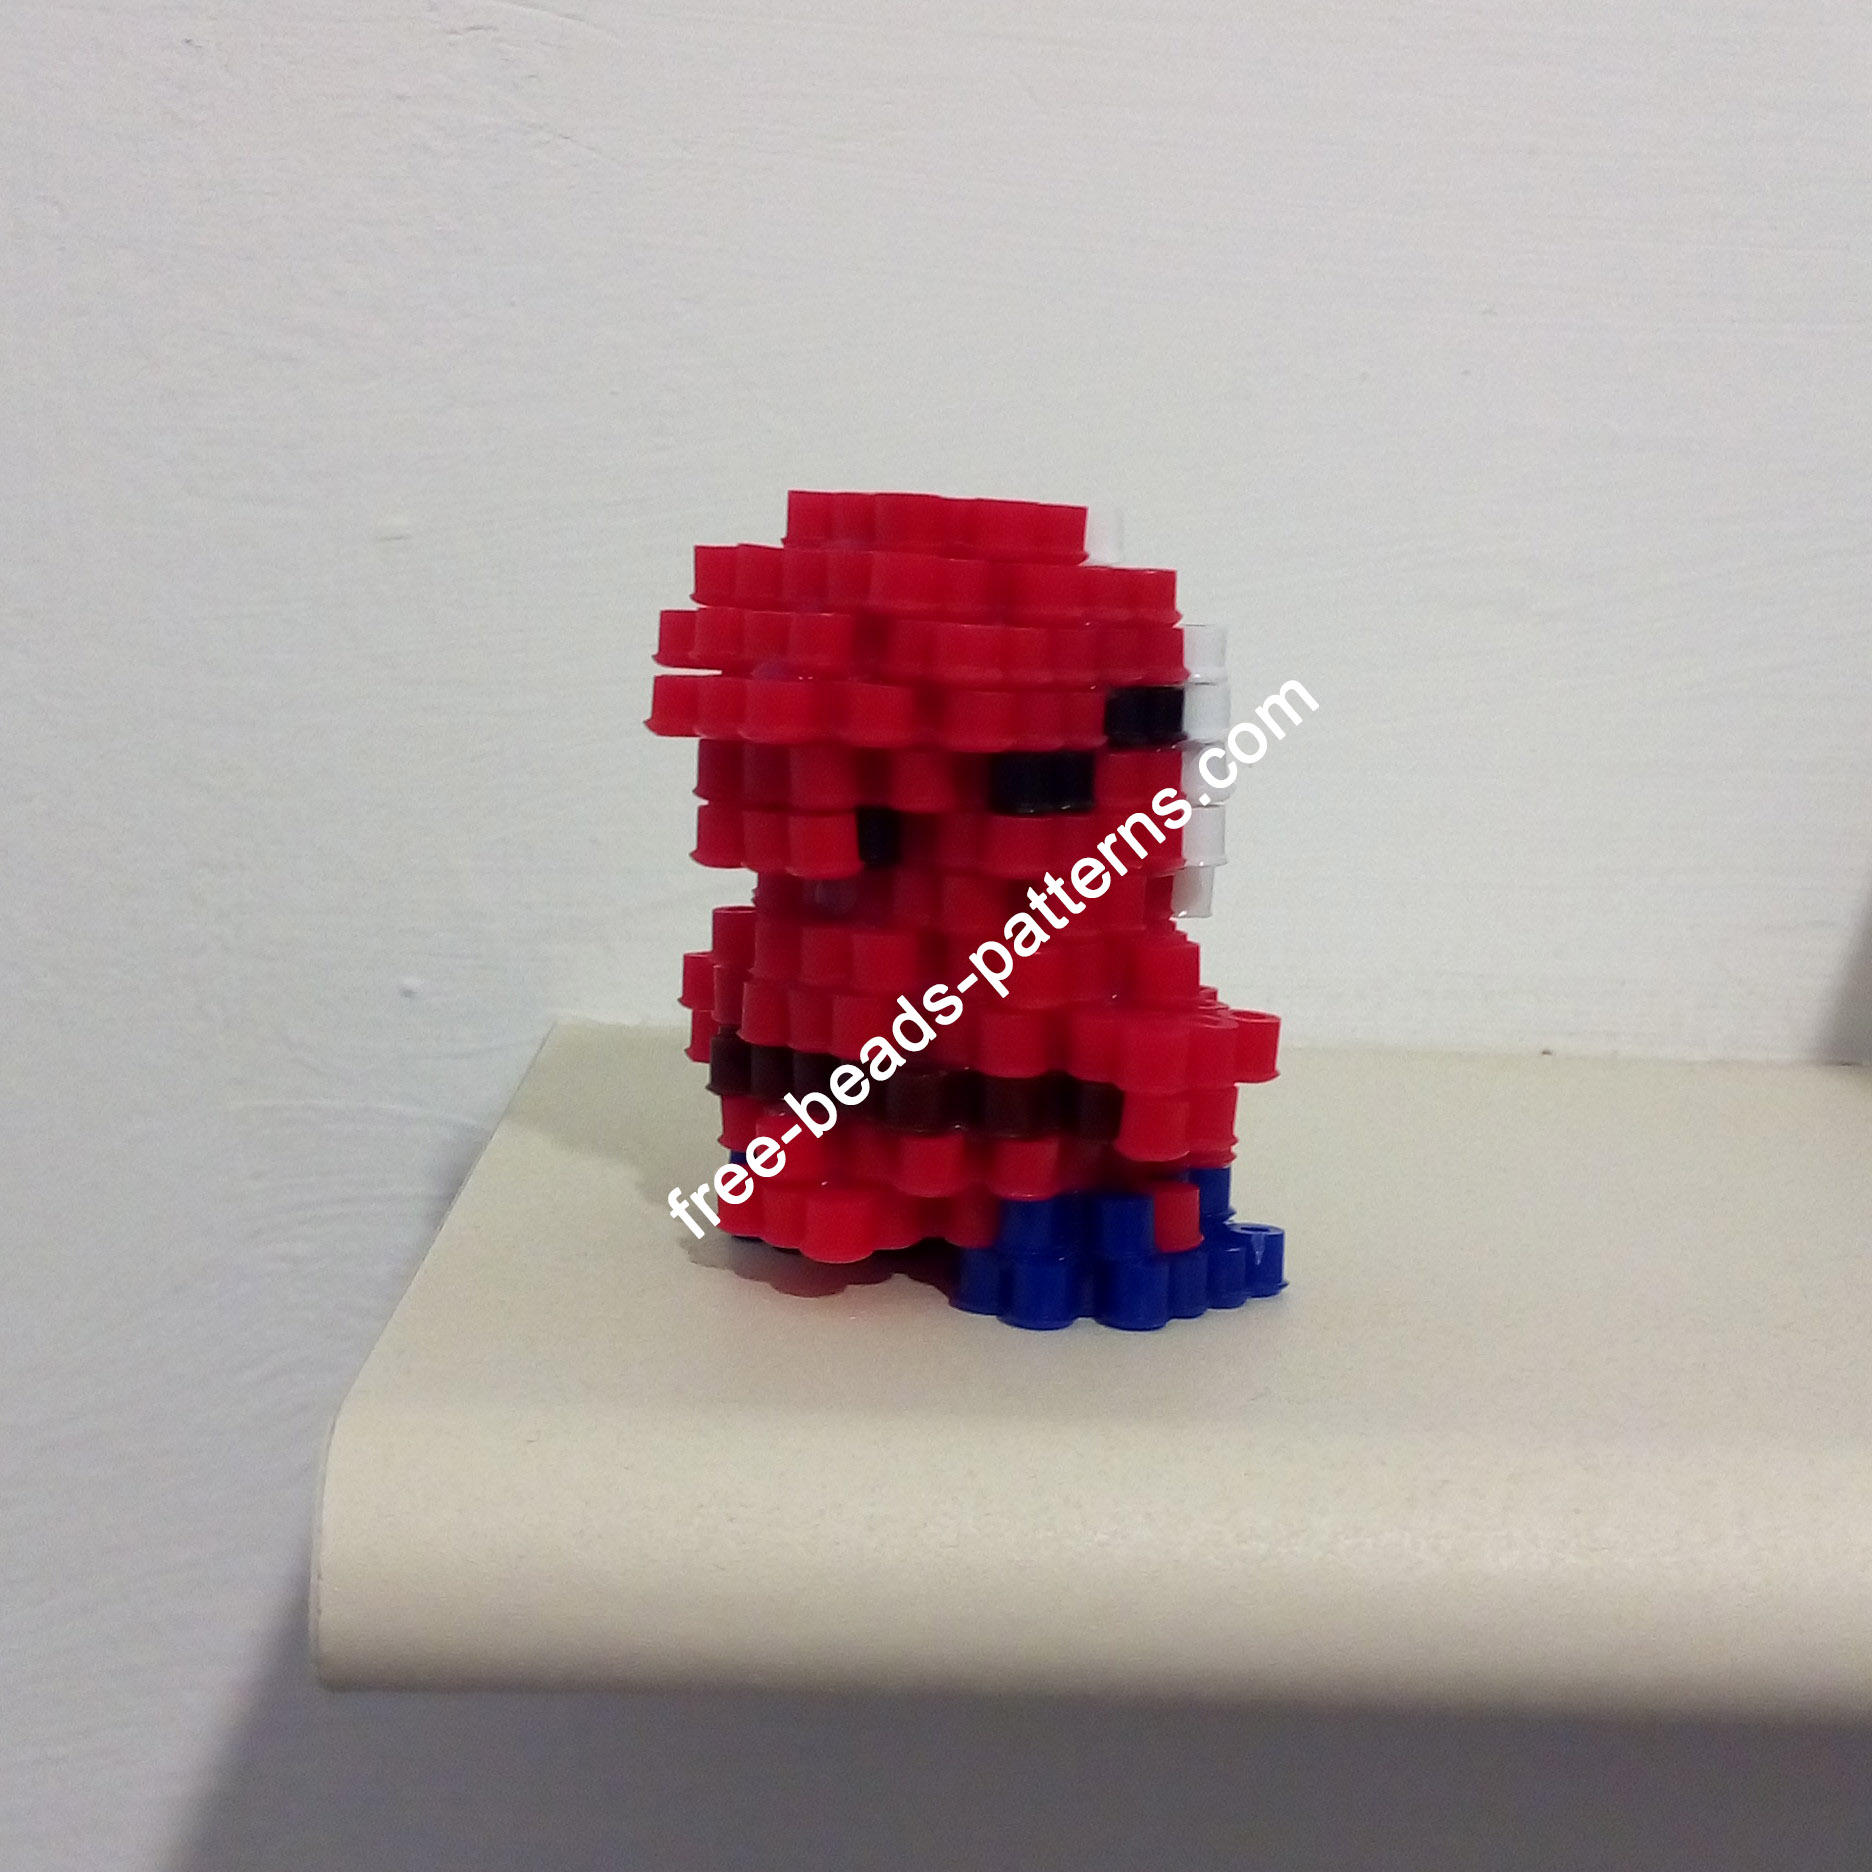 3D perler beads Shy Guy from Super Mario work photos (5)